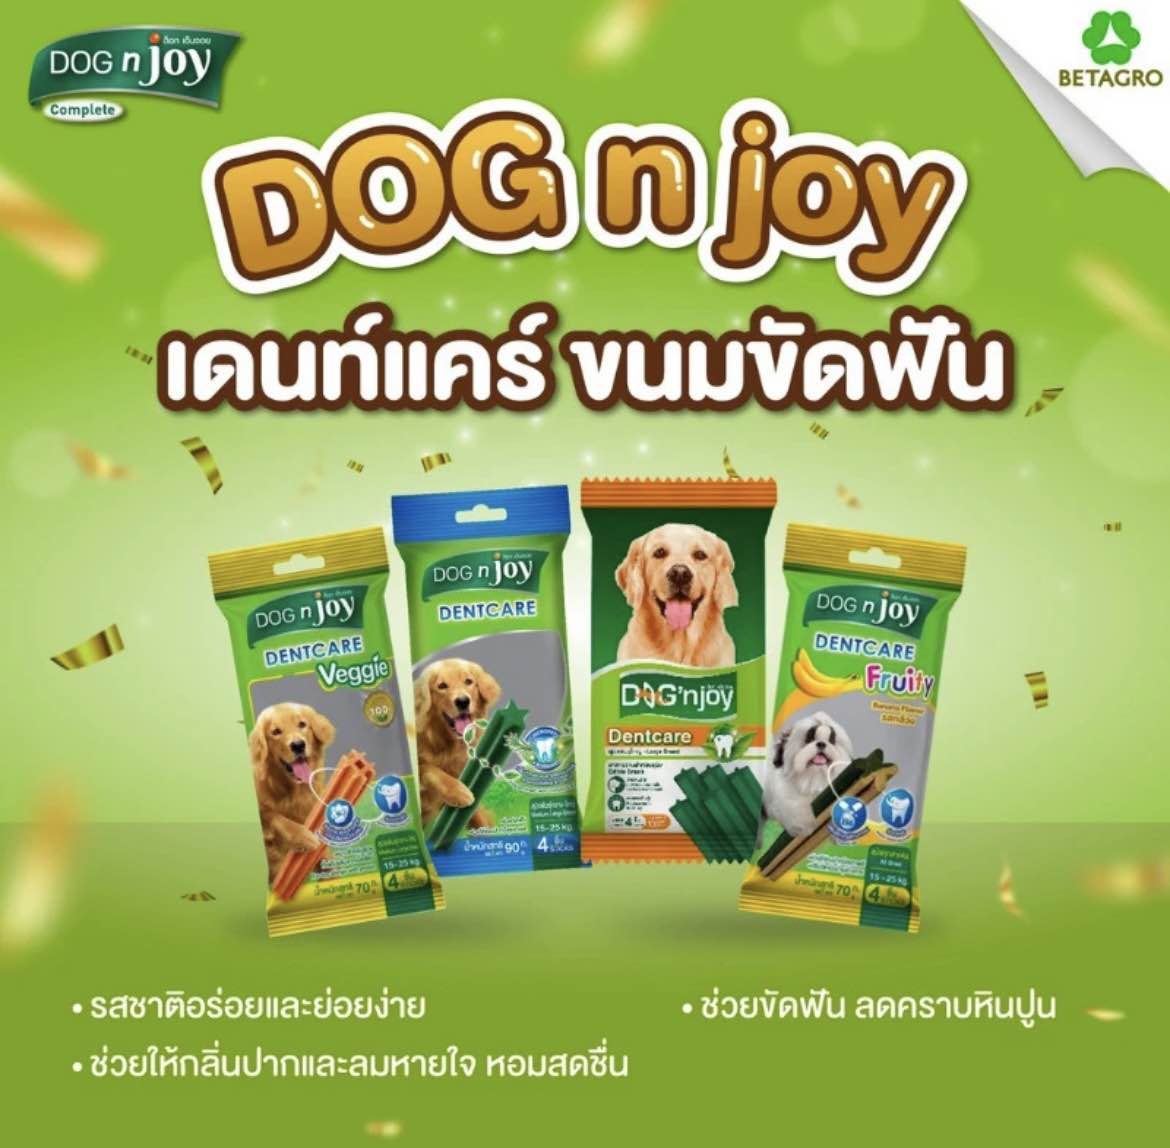 Dog N Joy Dentcare ขนมขัดฟันสุนัข ขนมสุนัข ด็อก แอน จอย เดนท์แคร์ Fruity  Veggie Chlorophyll | Lazada.co.th